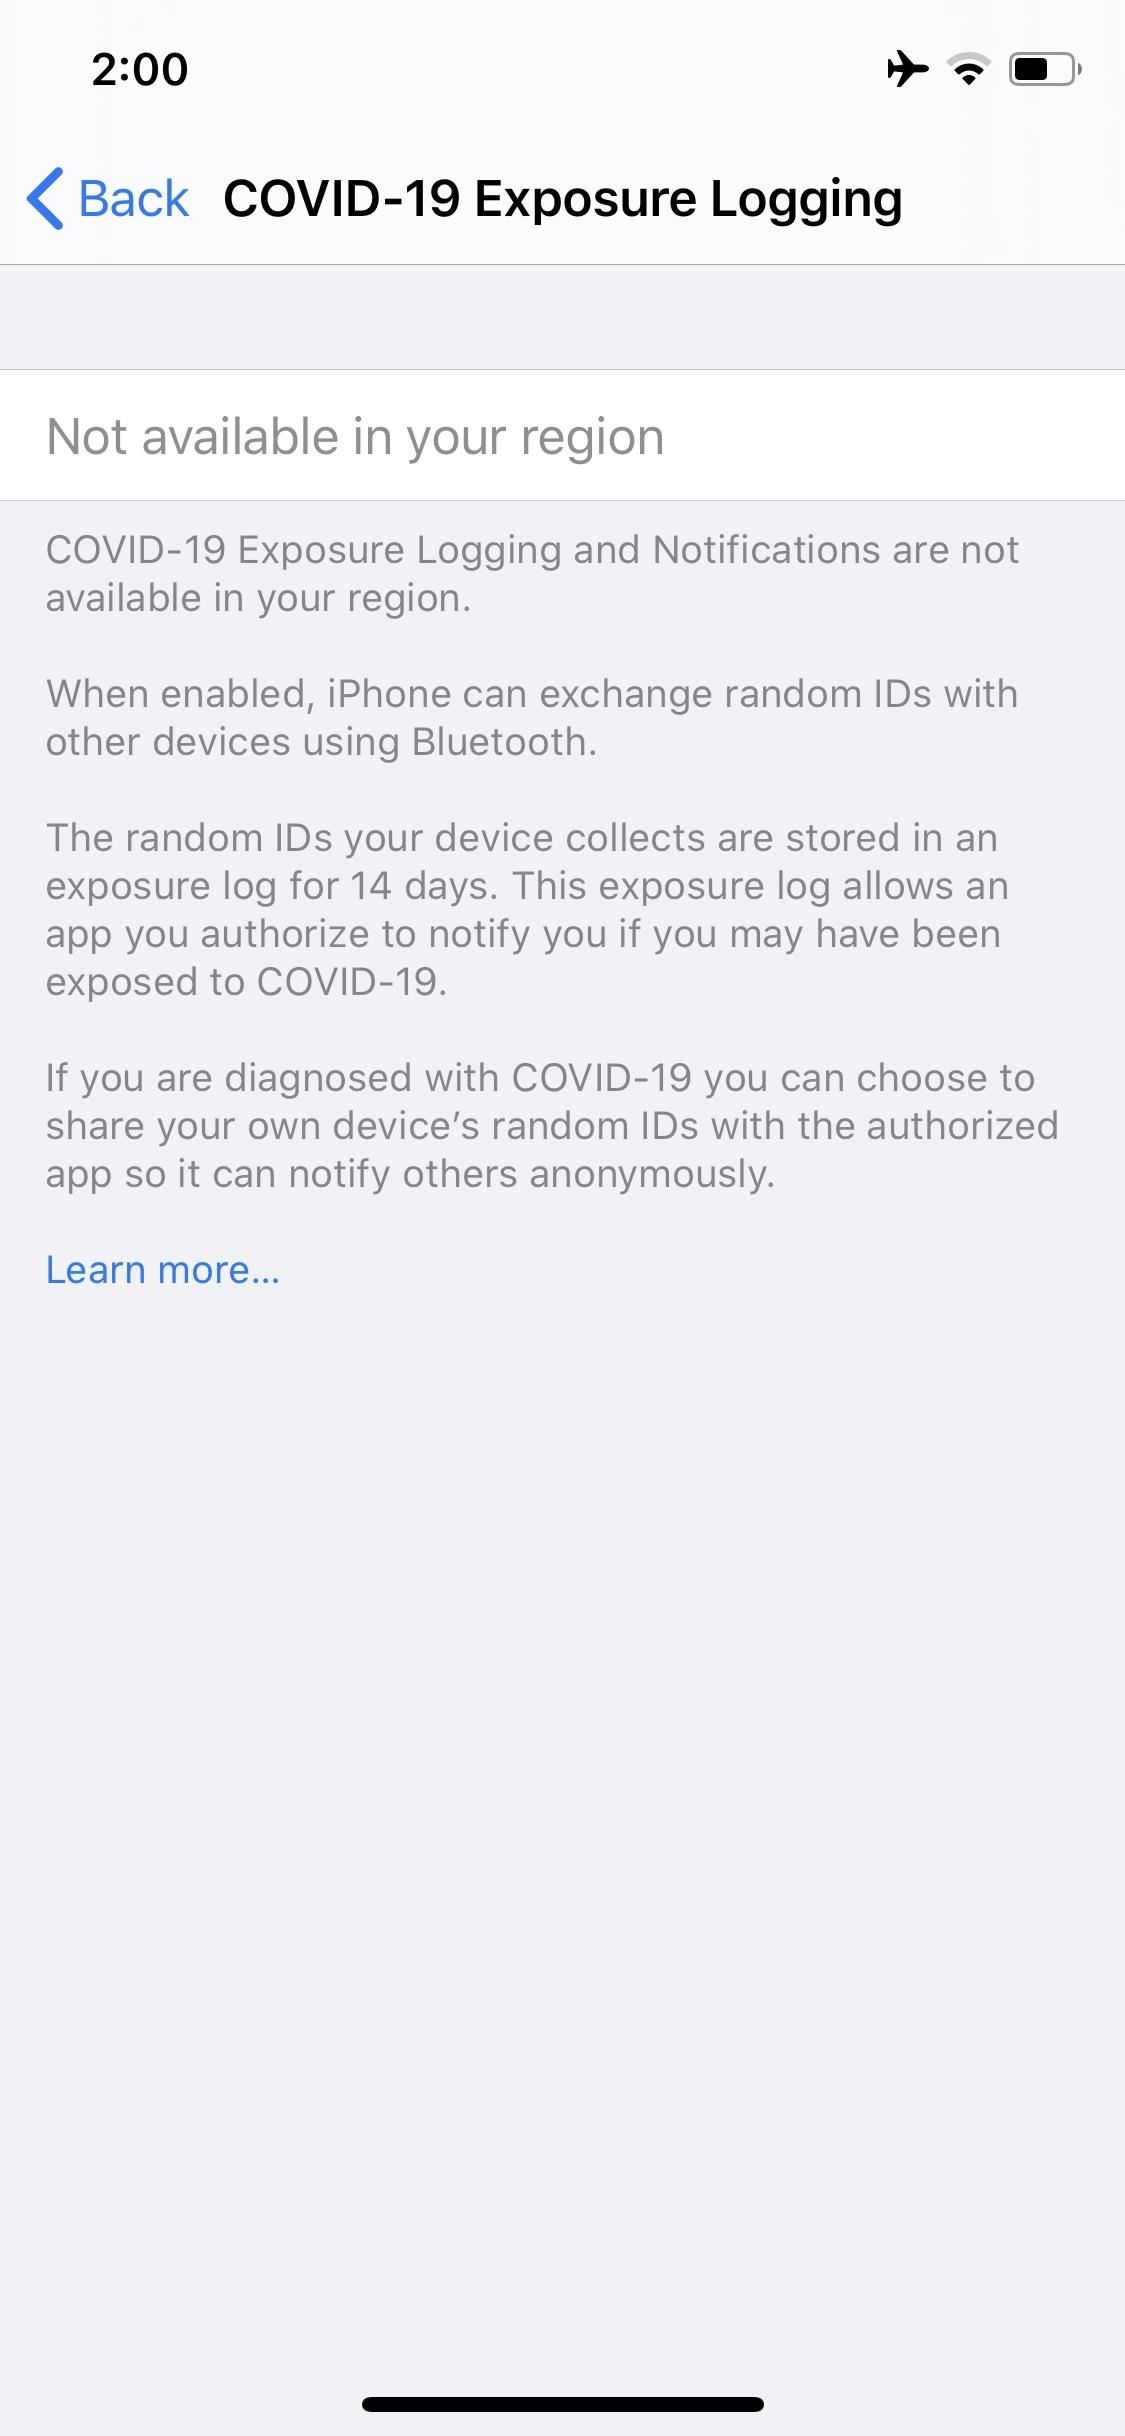 Apple's iOS 13.5 Developer GM Includes Face ID Updates, COVID-19 Exposure Notification Logging & More